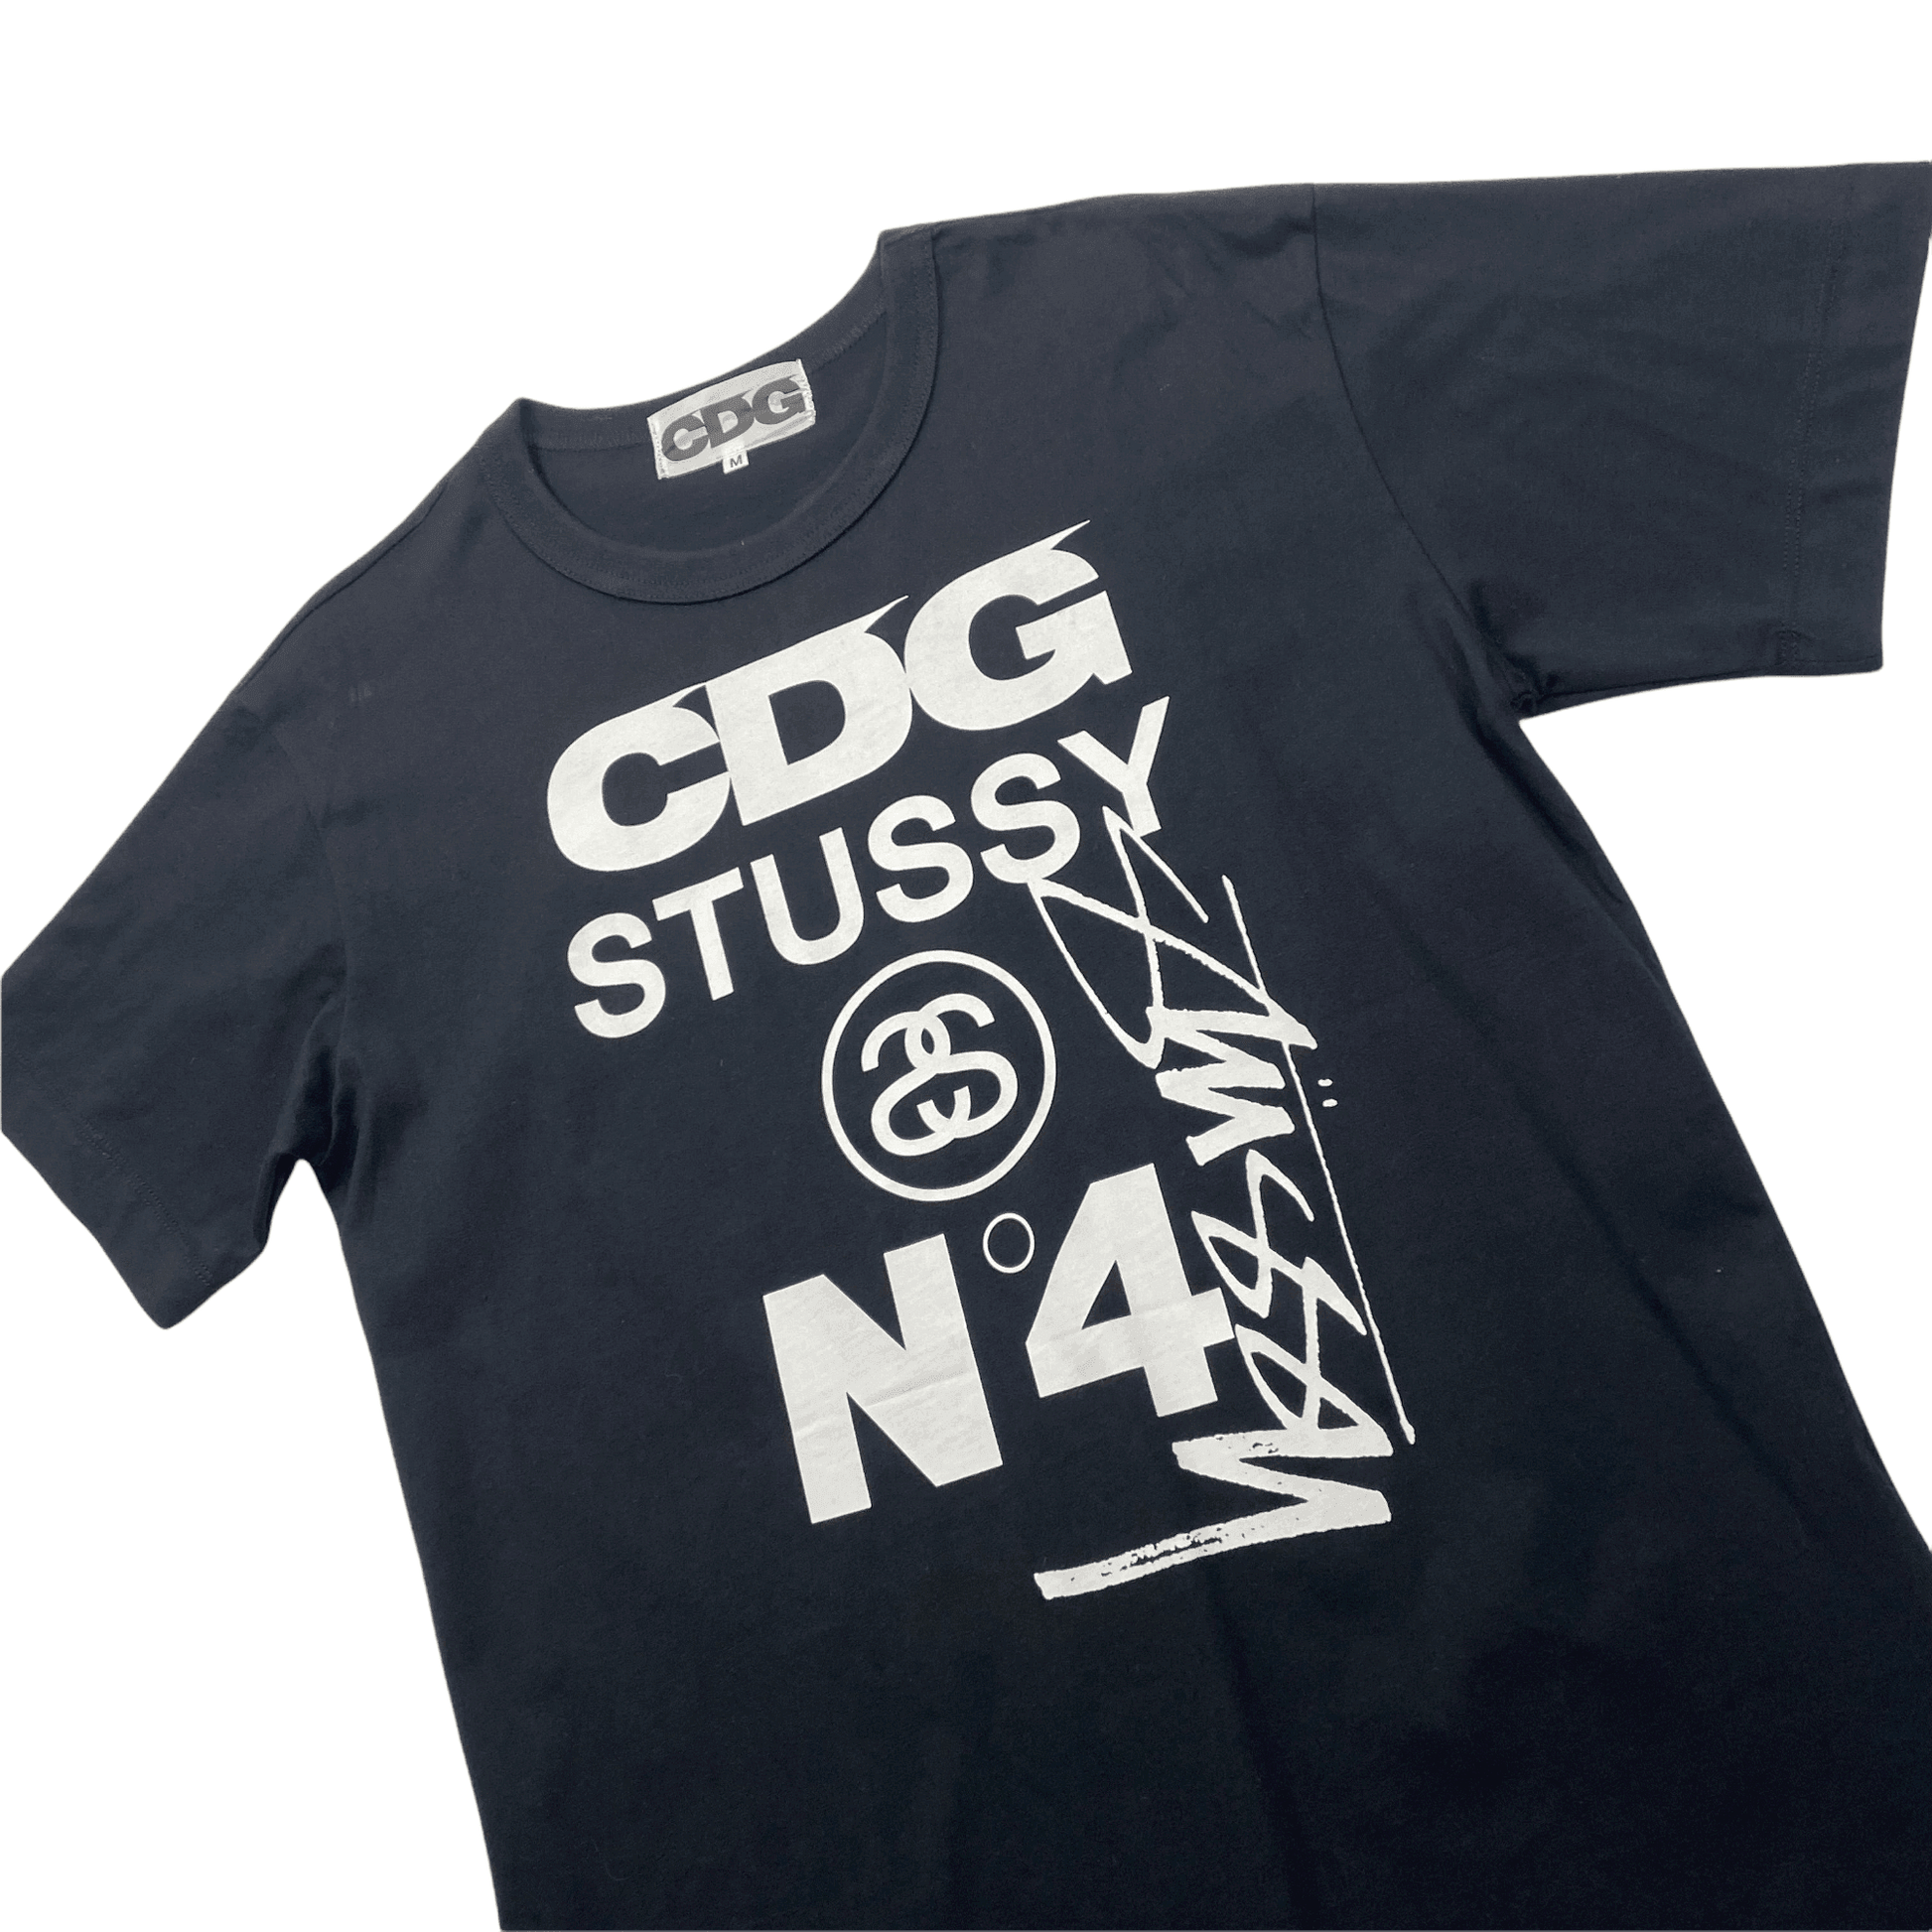 Black Stussy x Comme Des Garcons (CDG) Tee - Medium - The Streetwear Studio